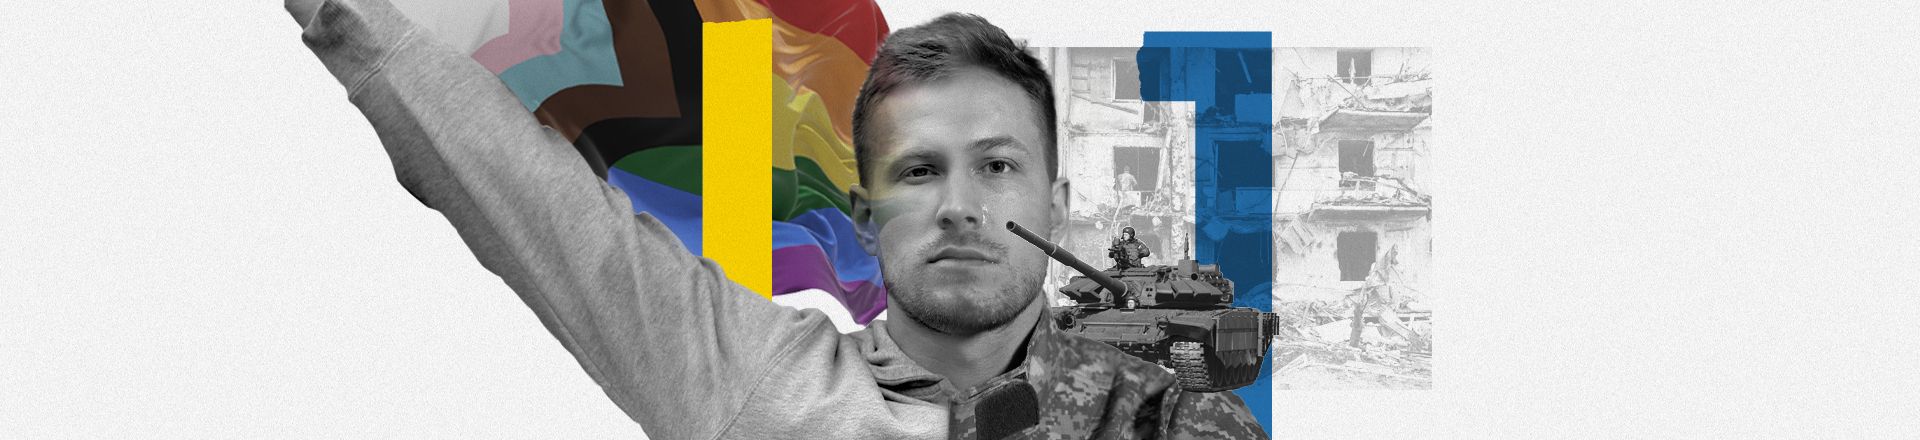 Russia's War Against Ukraine: Effects on the Ukrainian LGBTQIA+ Community